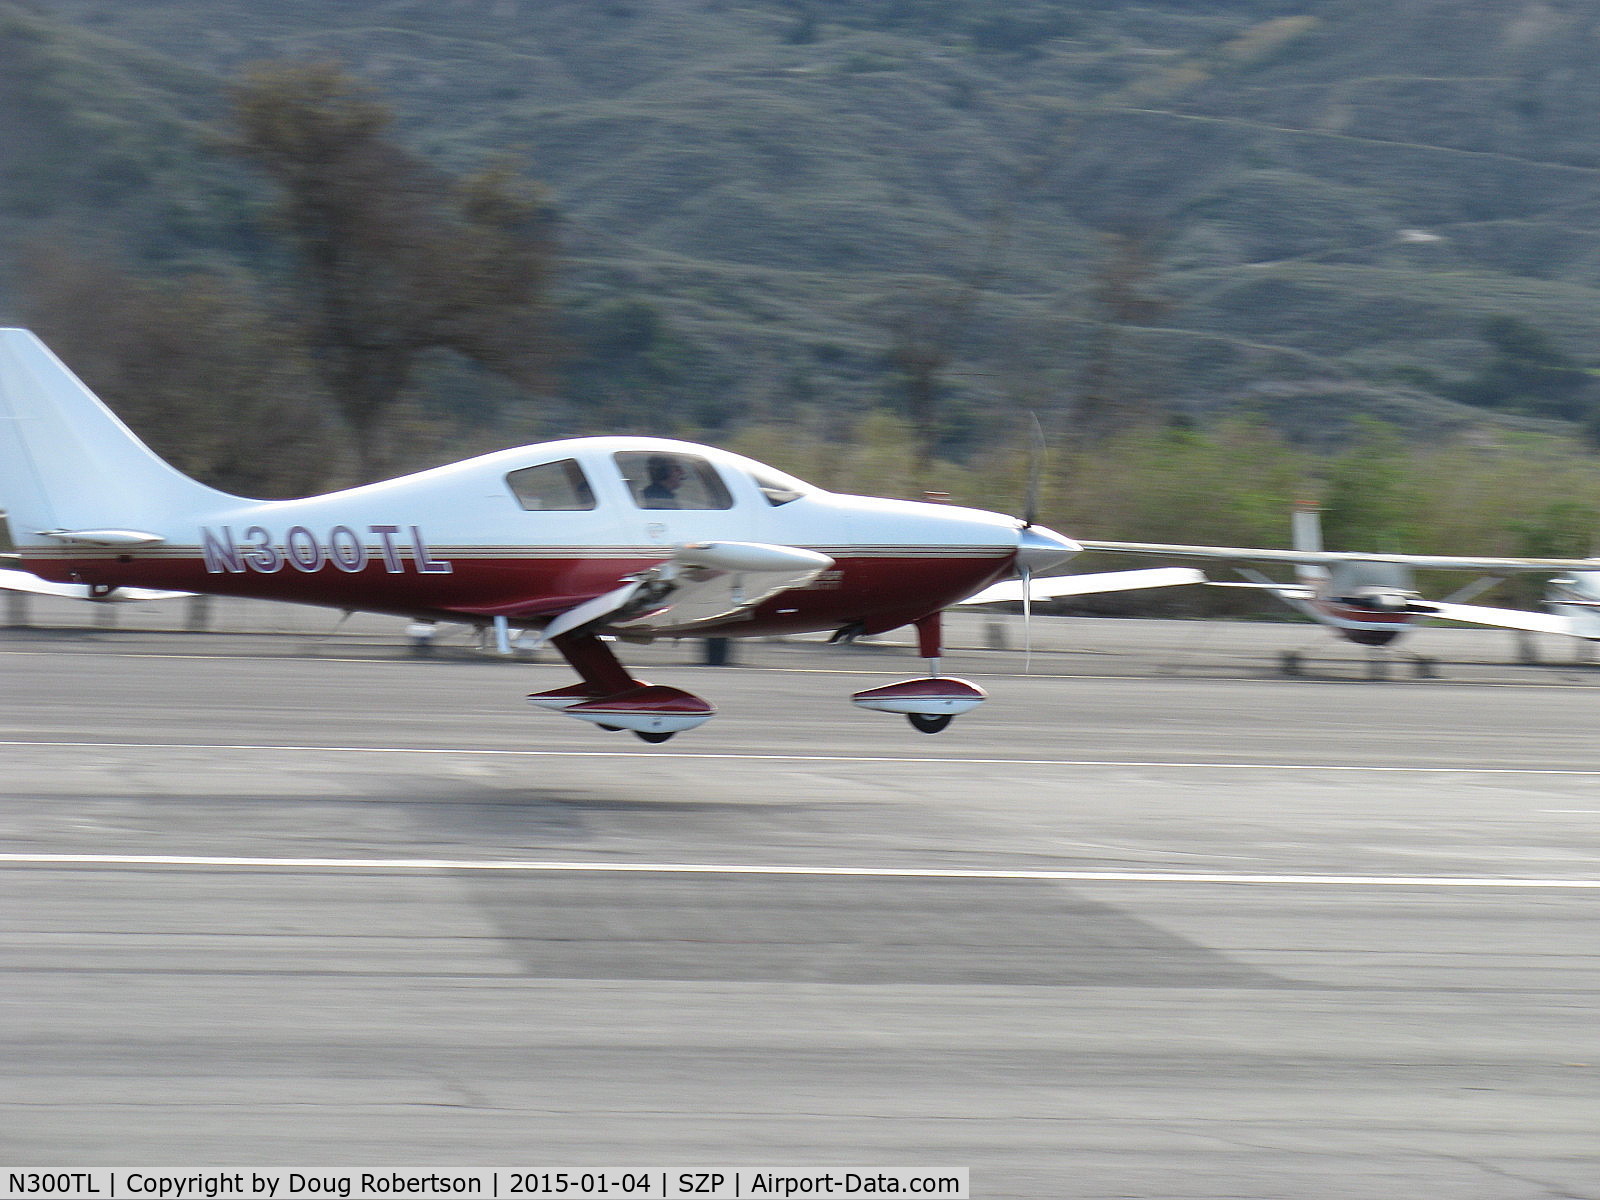 N300TL, 2003 Lancair LC-40-550FG C/N 40067, 2003 Lancair LC-40-550FG Columbia 300 TOURER, Continental IO-550-N2B 300 Hp with FADEC, landing Rwy 22